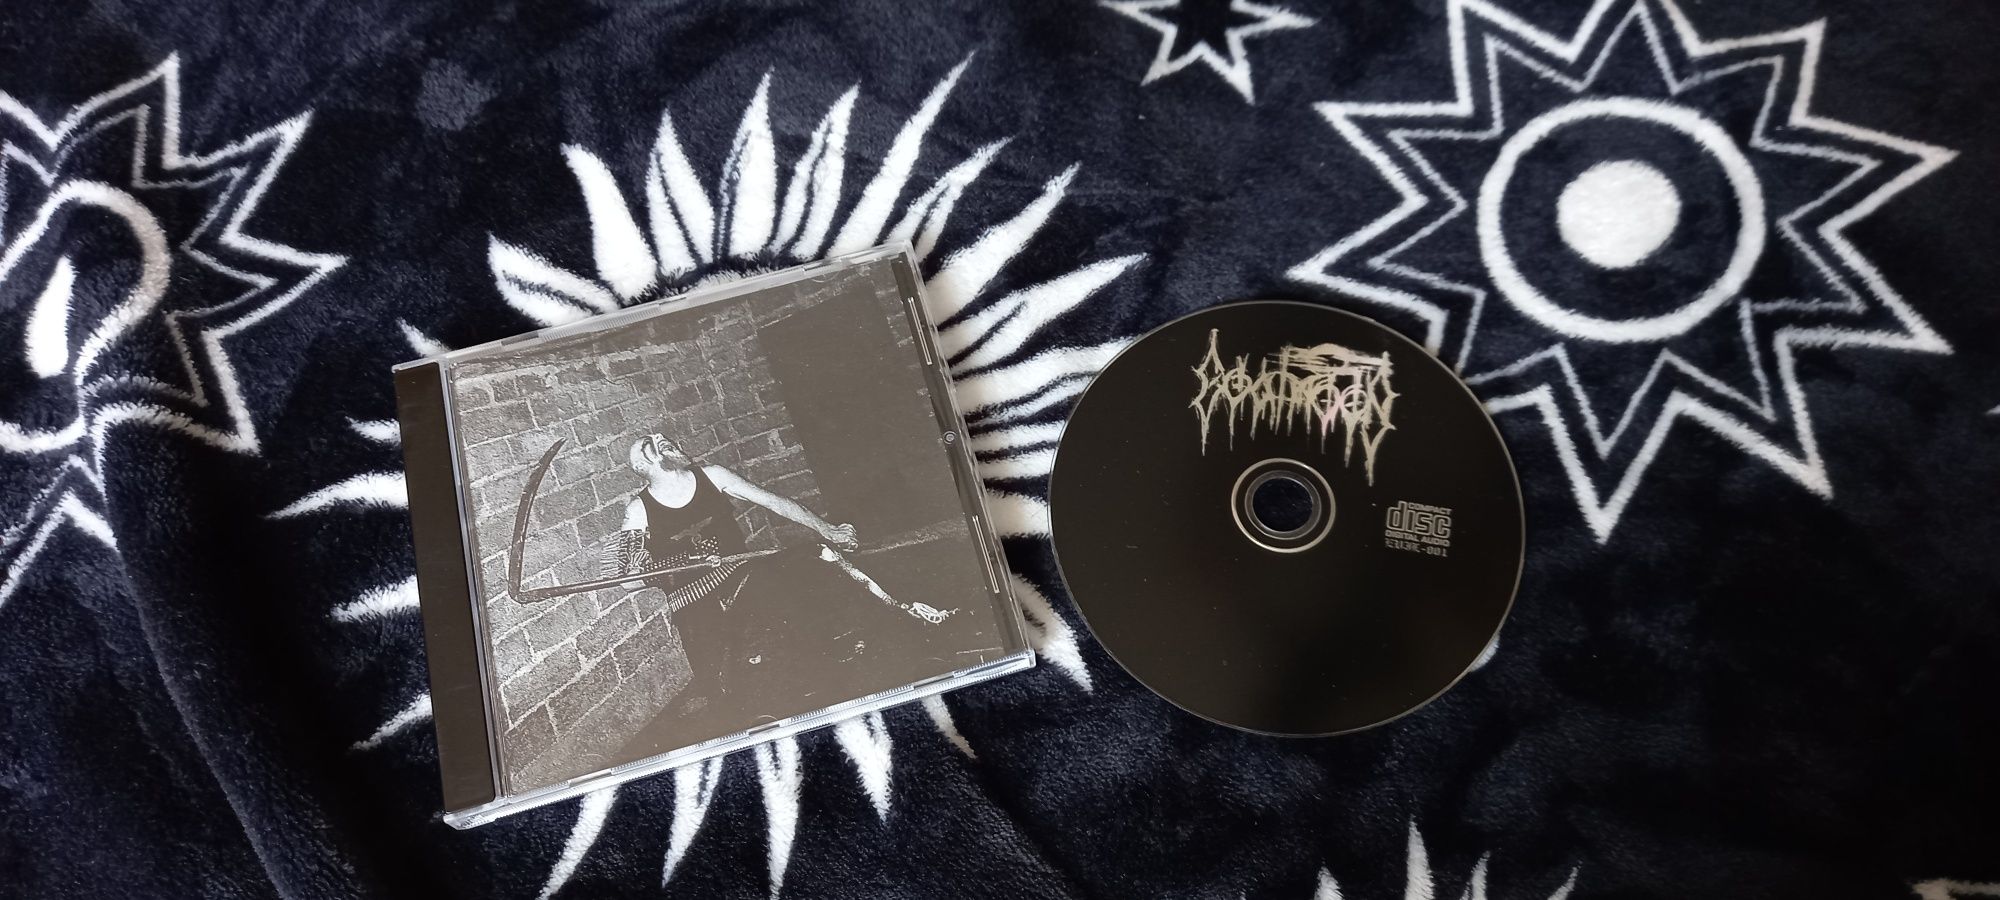 Goatmoon - Death Before Dishonour CD